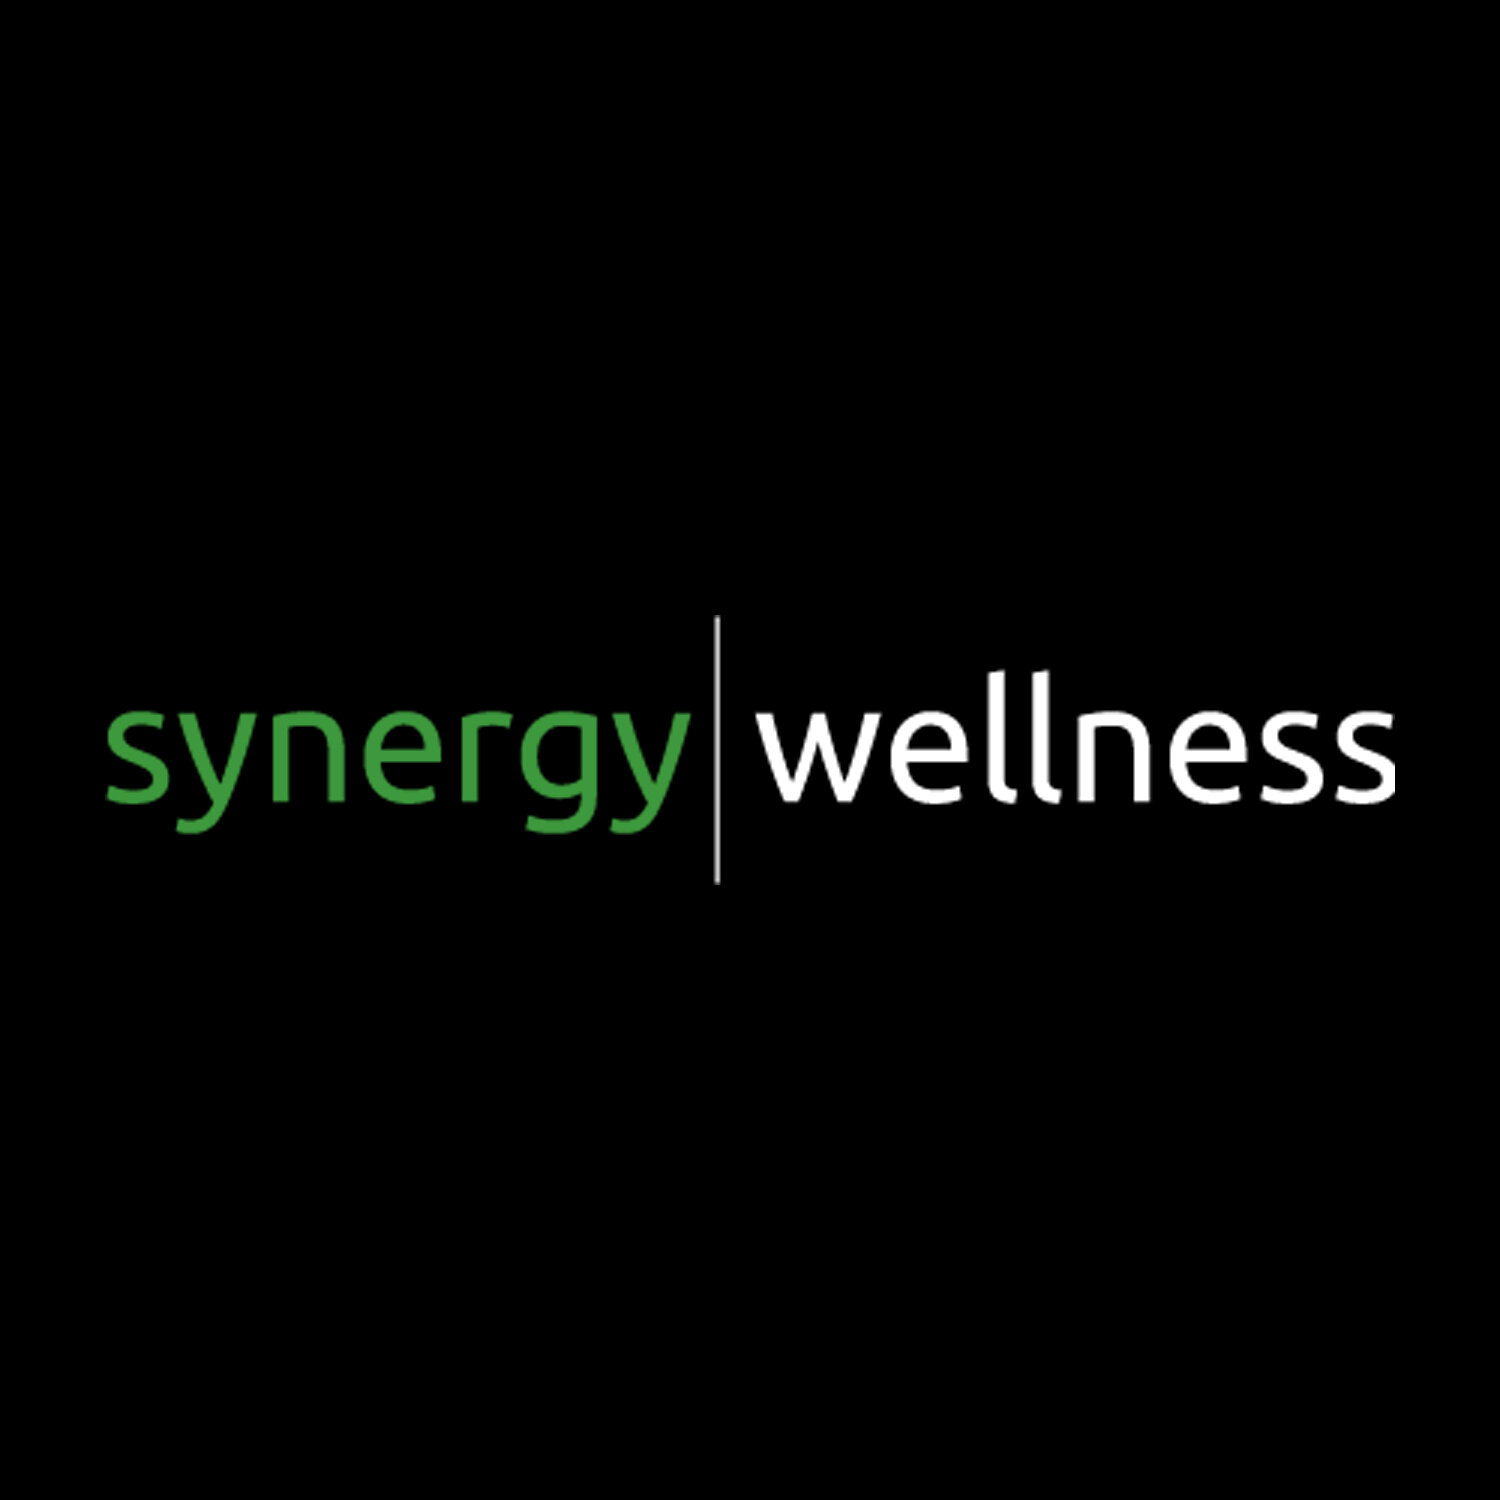 synergy wellness - logo.jpg